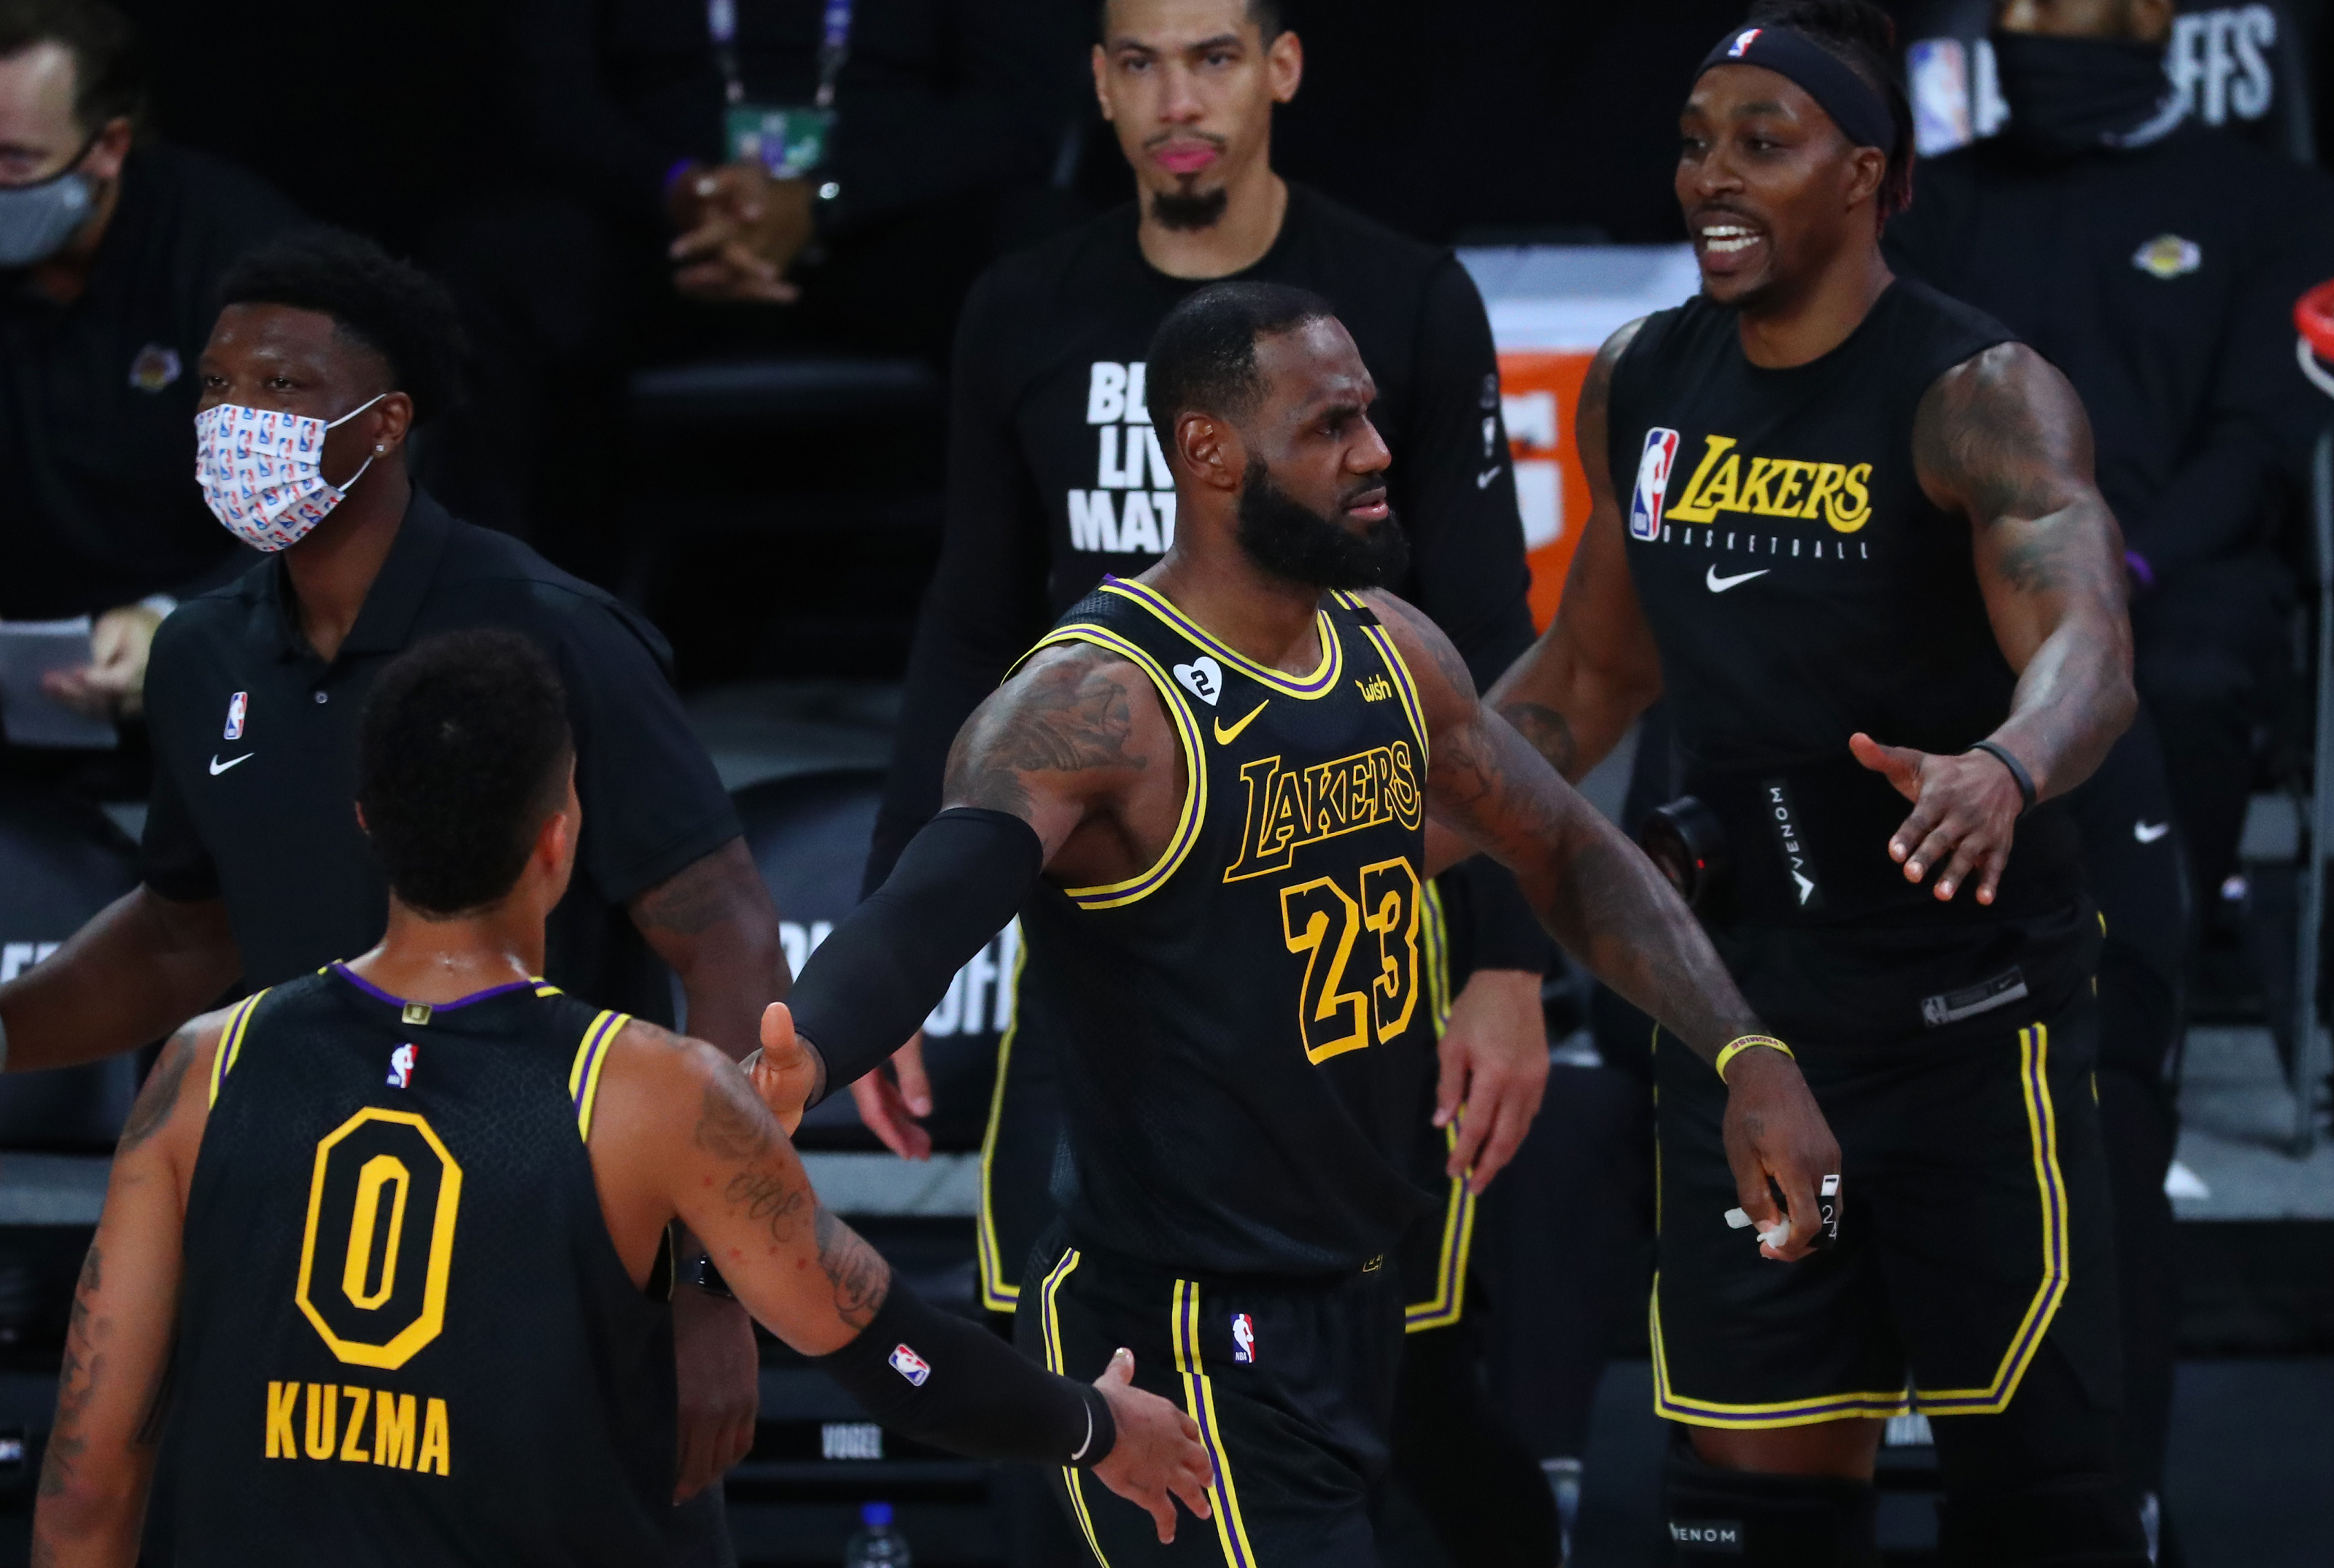 Photos: Lakers vs. Blazers Game 4 (8/24/20) Photo Gallery